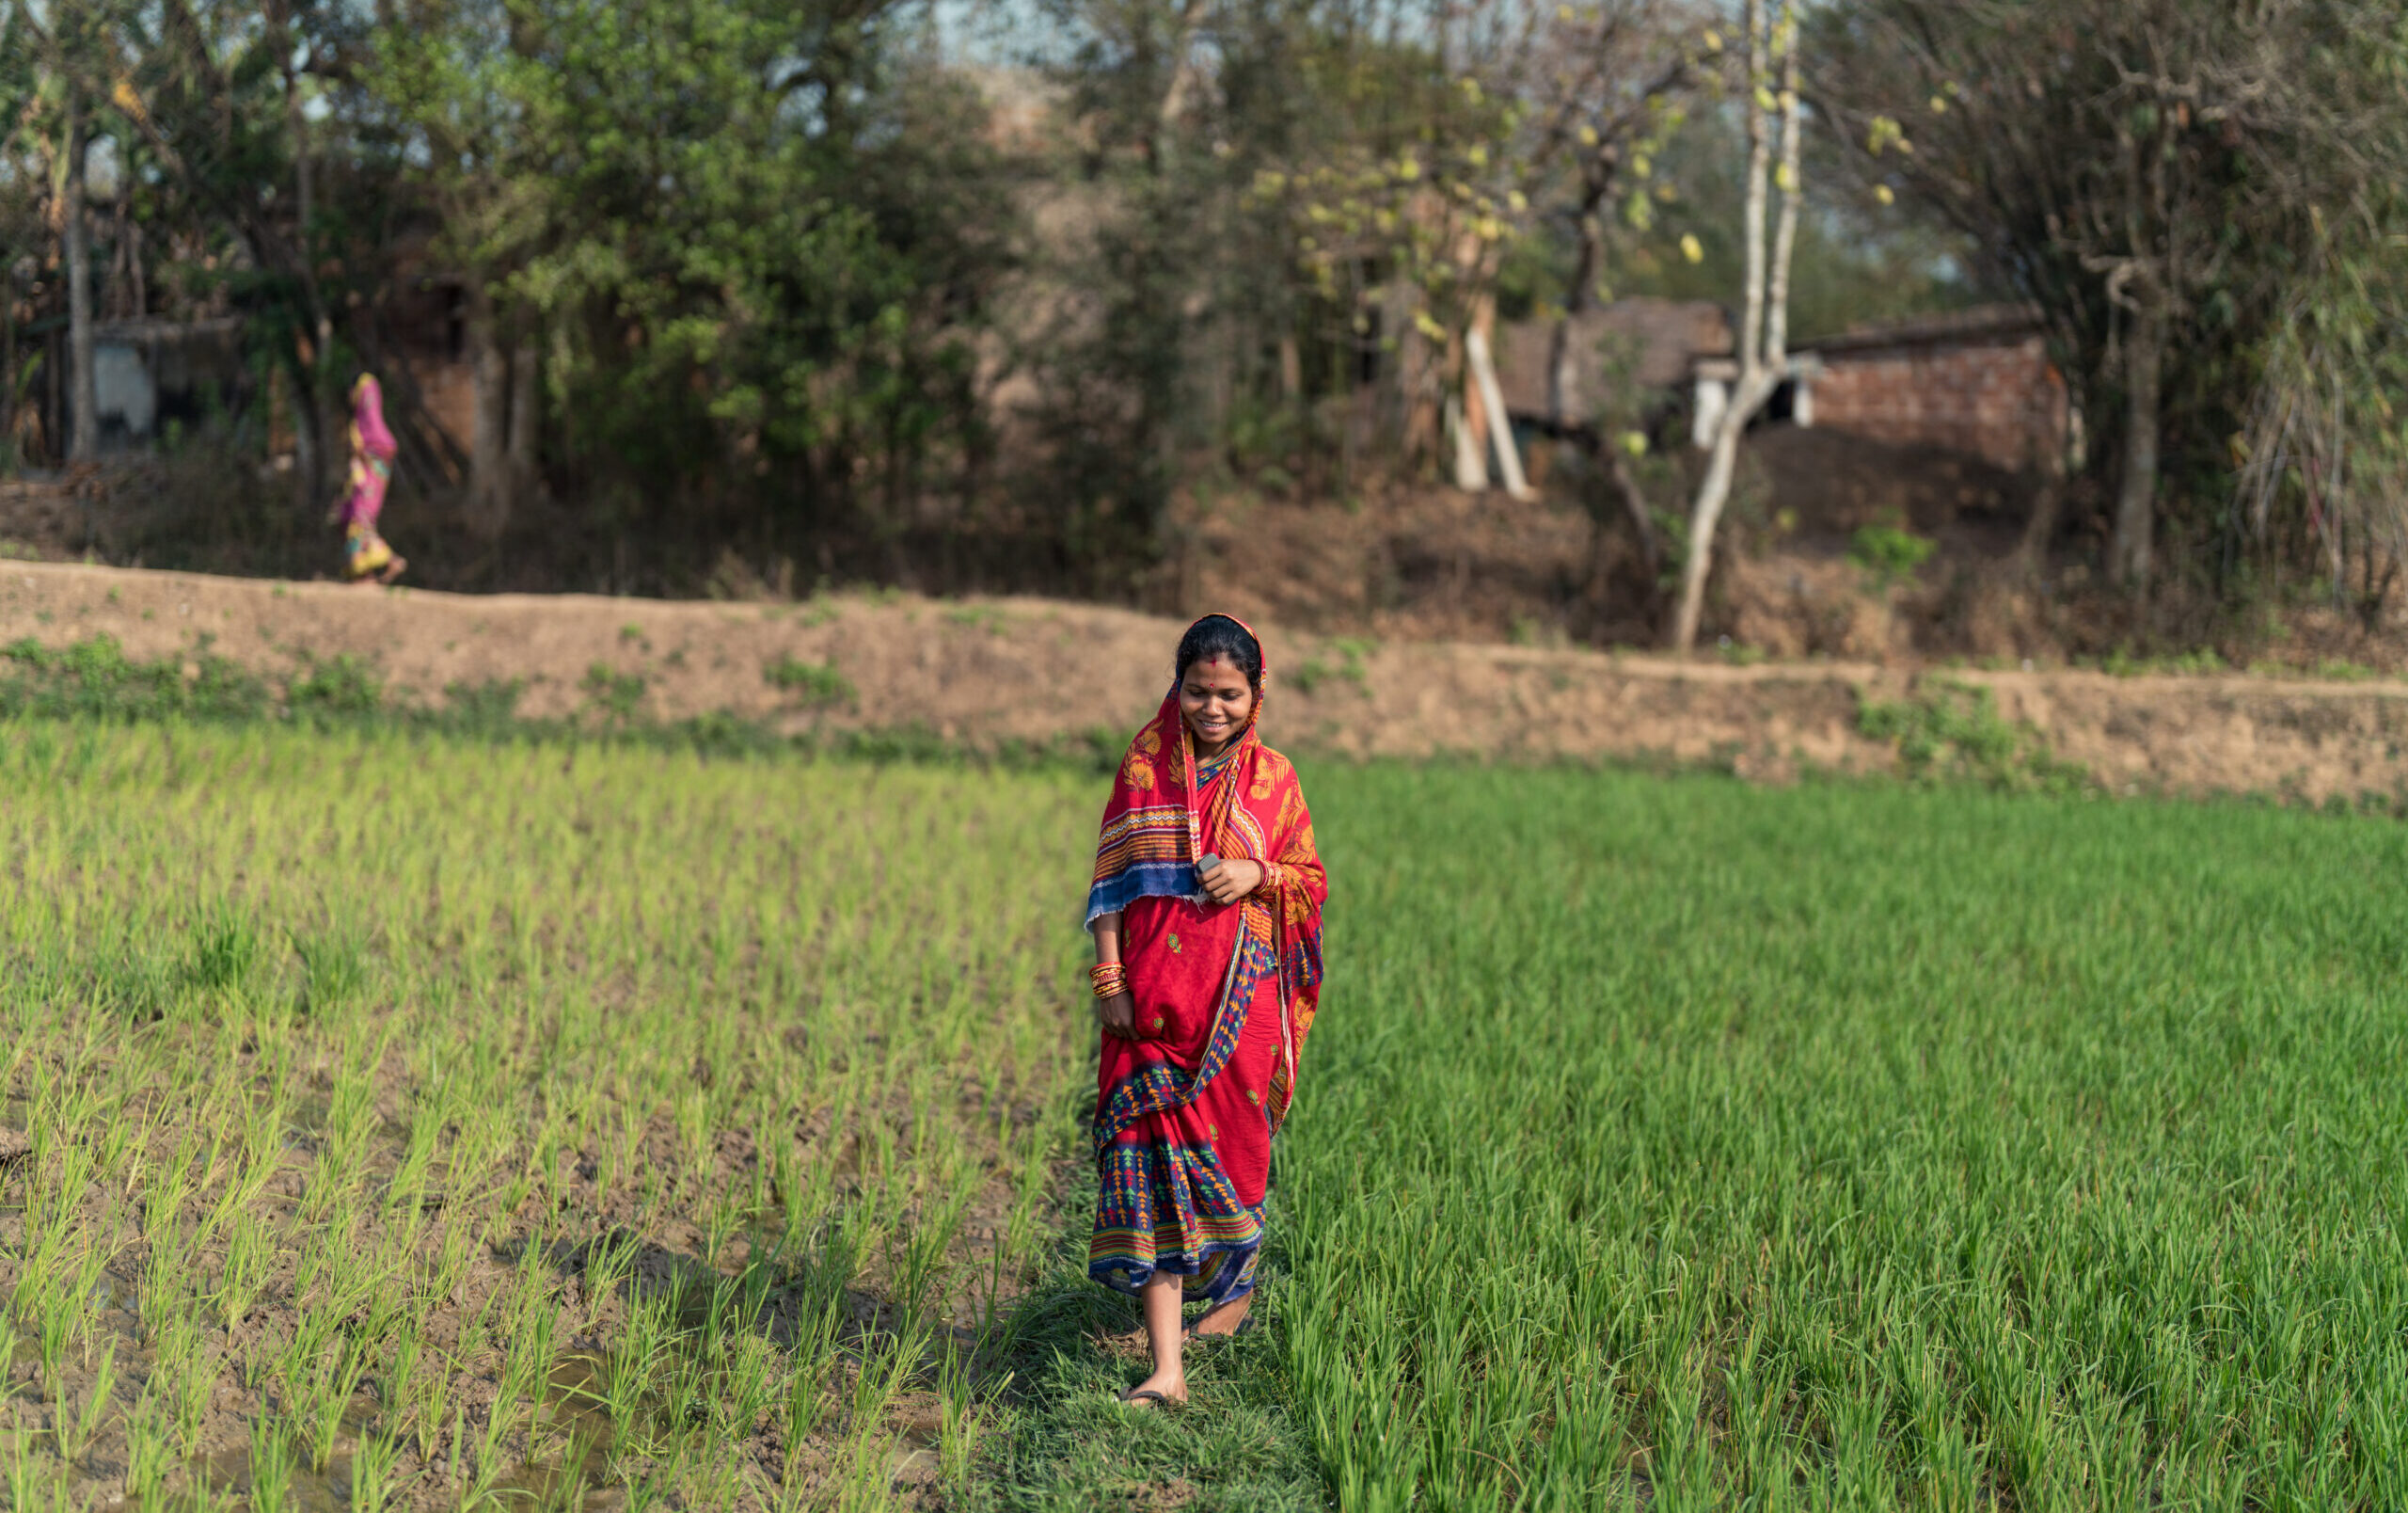 Manashi walks through her paddy field.